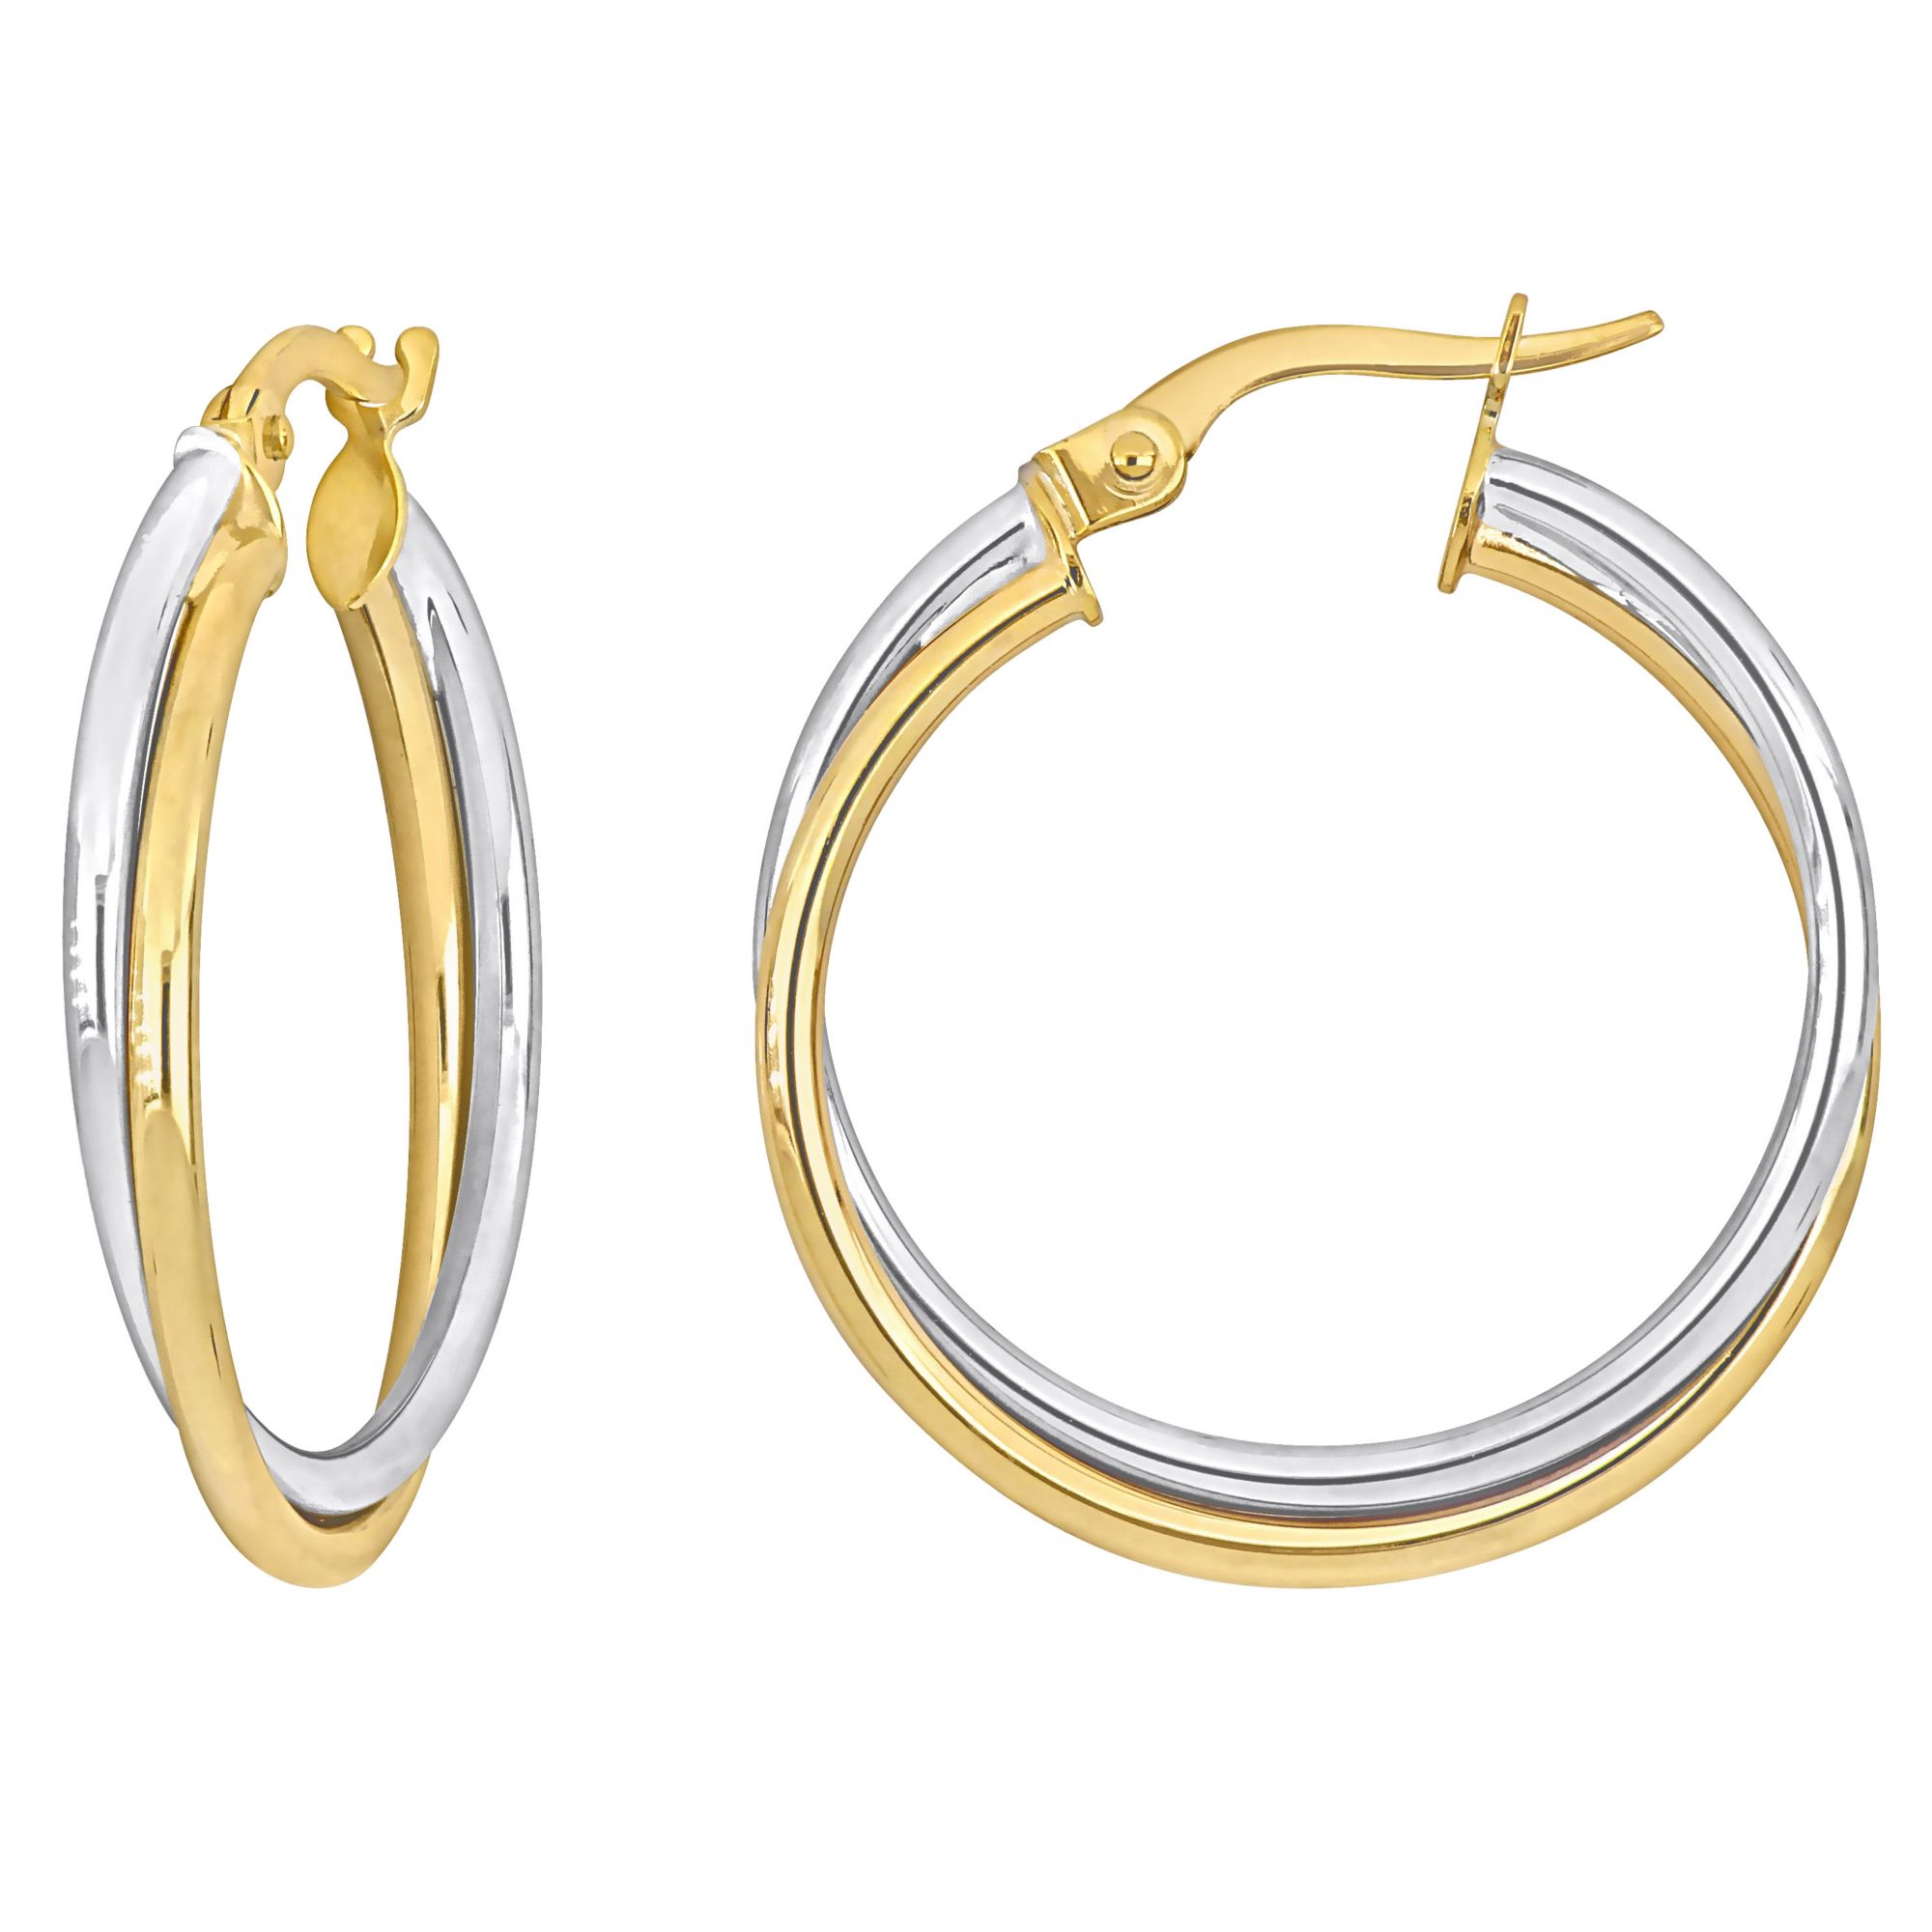 Double C Earrings 10K Gold / White